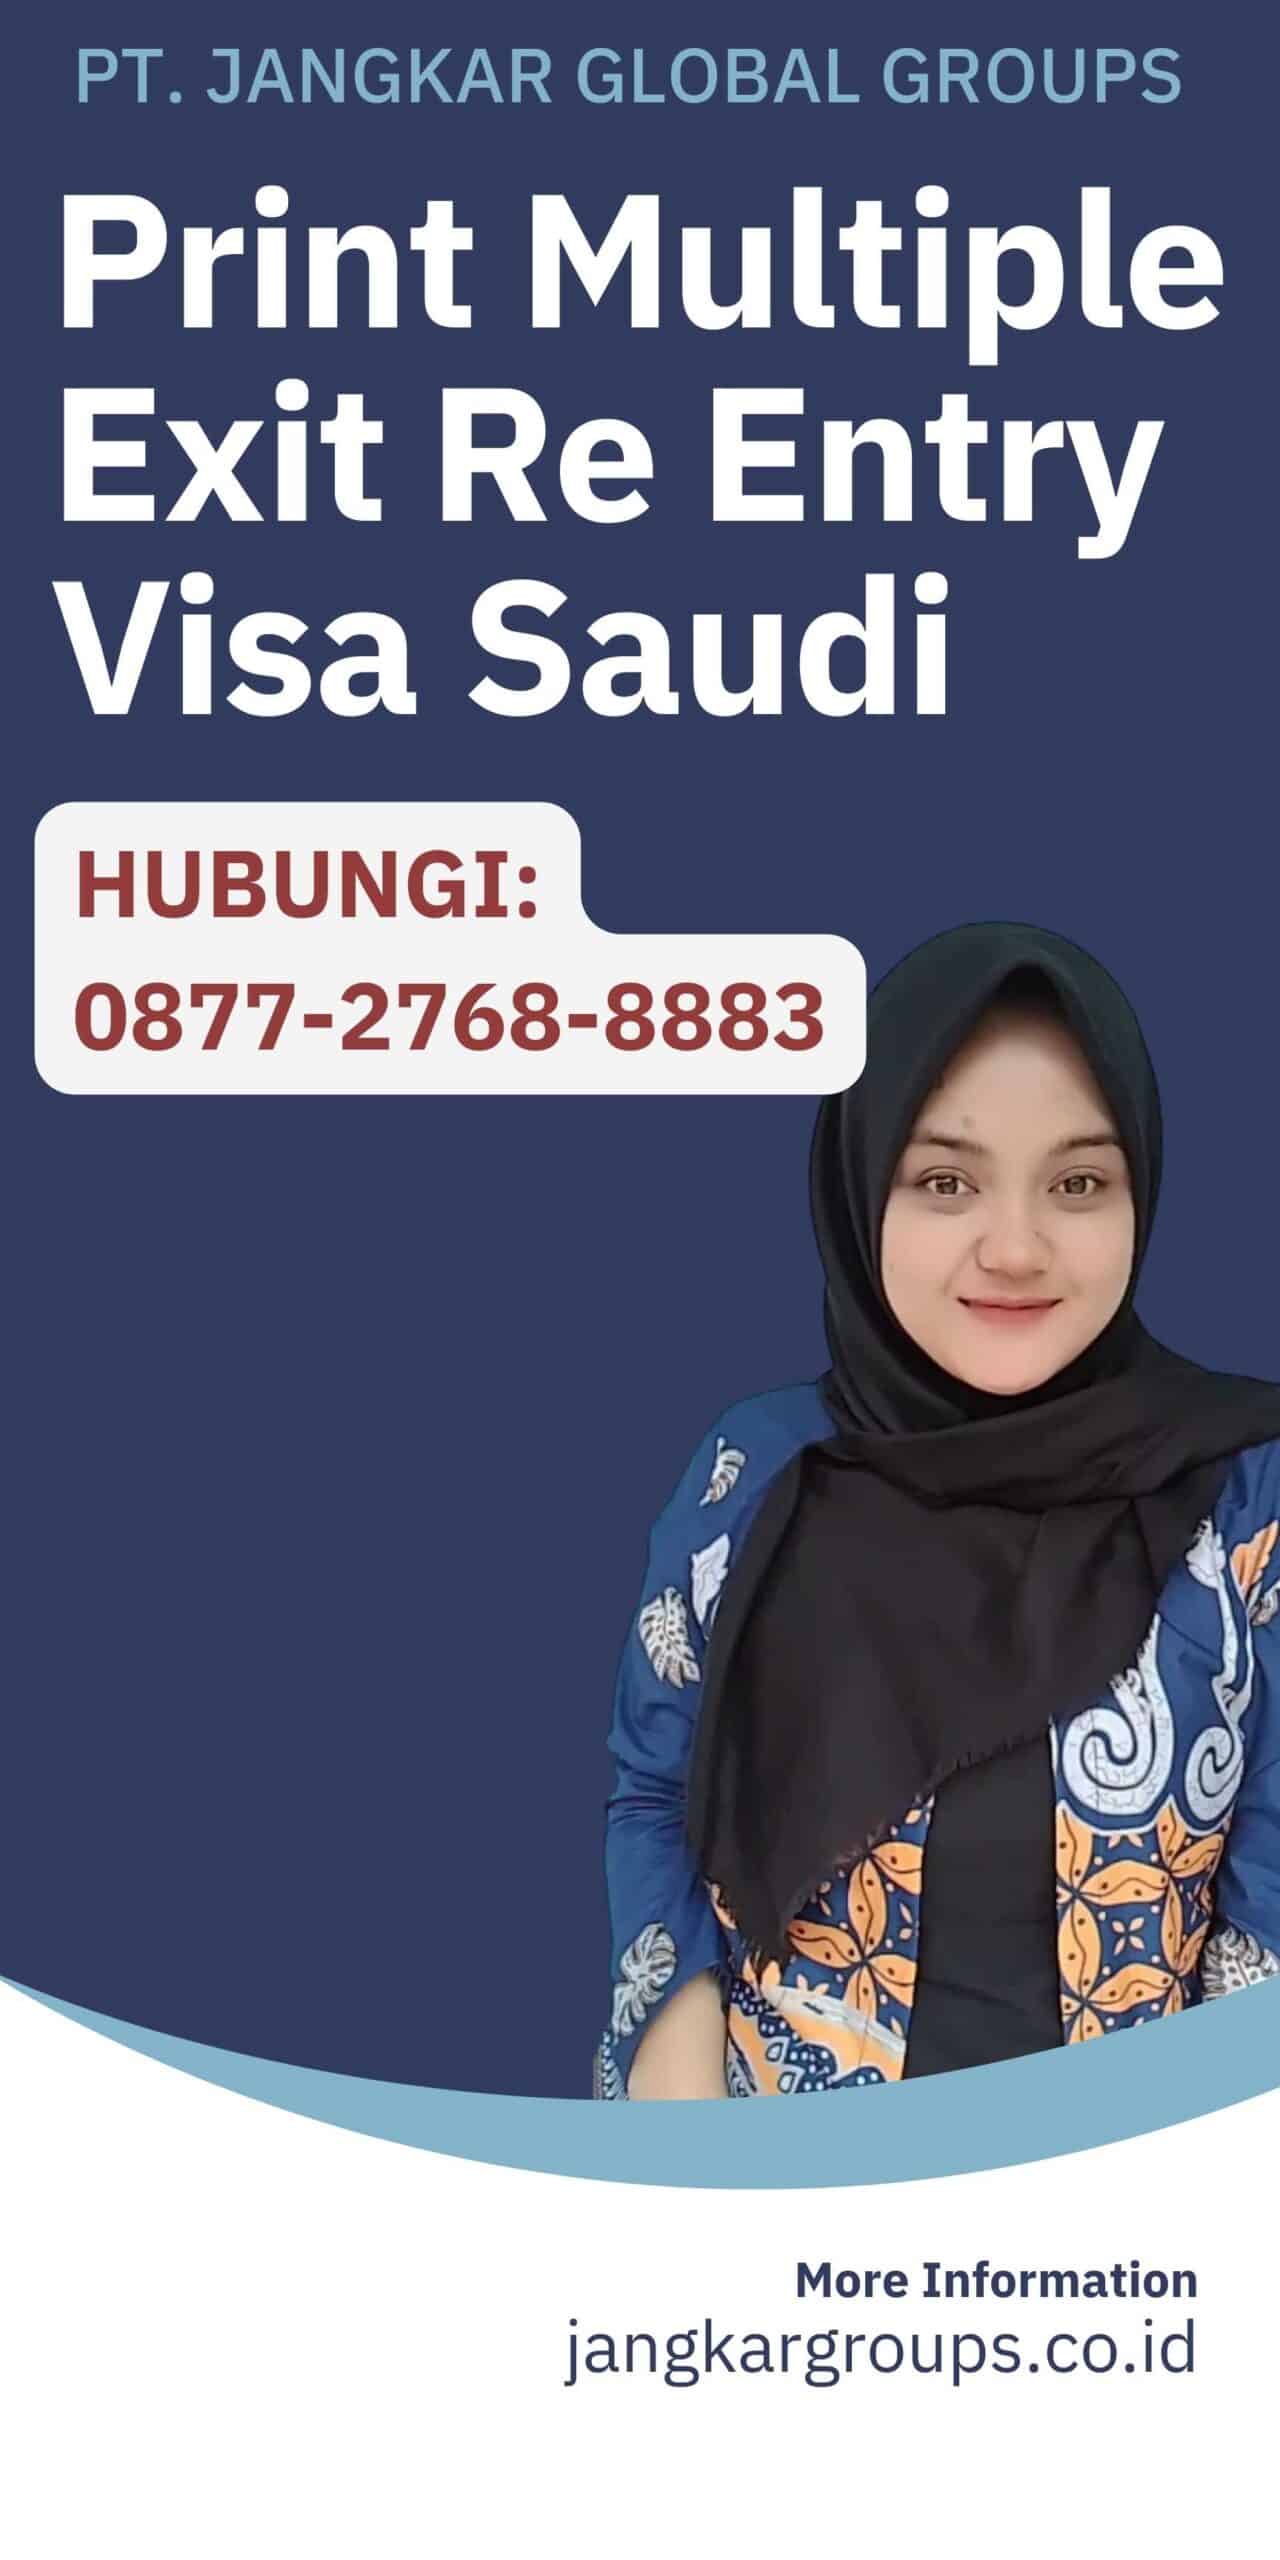 Print Multiple Exit Re Entry Visa Saudi